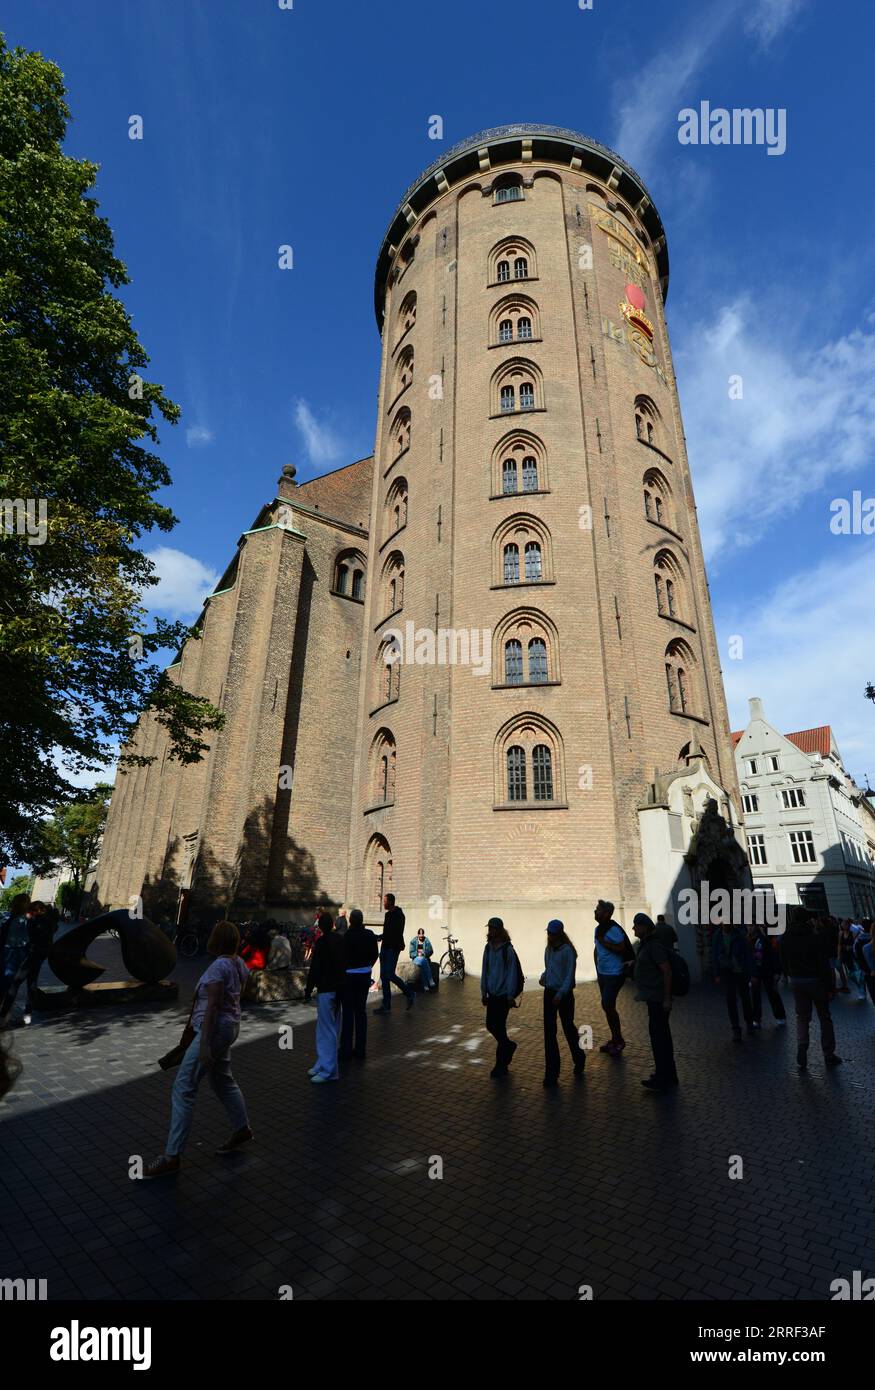 The Round tower 17th-century tower built as an astronomical observatory. Købmagergad, Copenhagen, Denmark Stock Photo